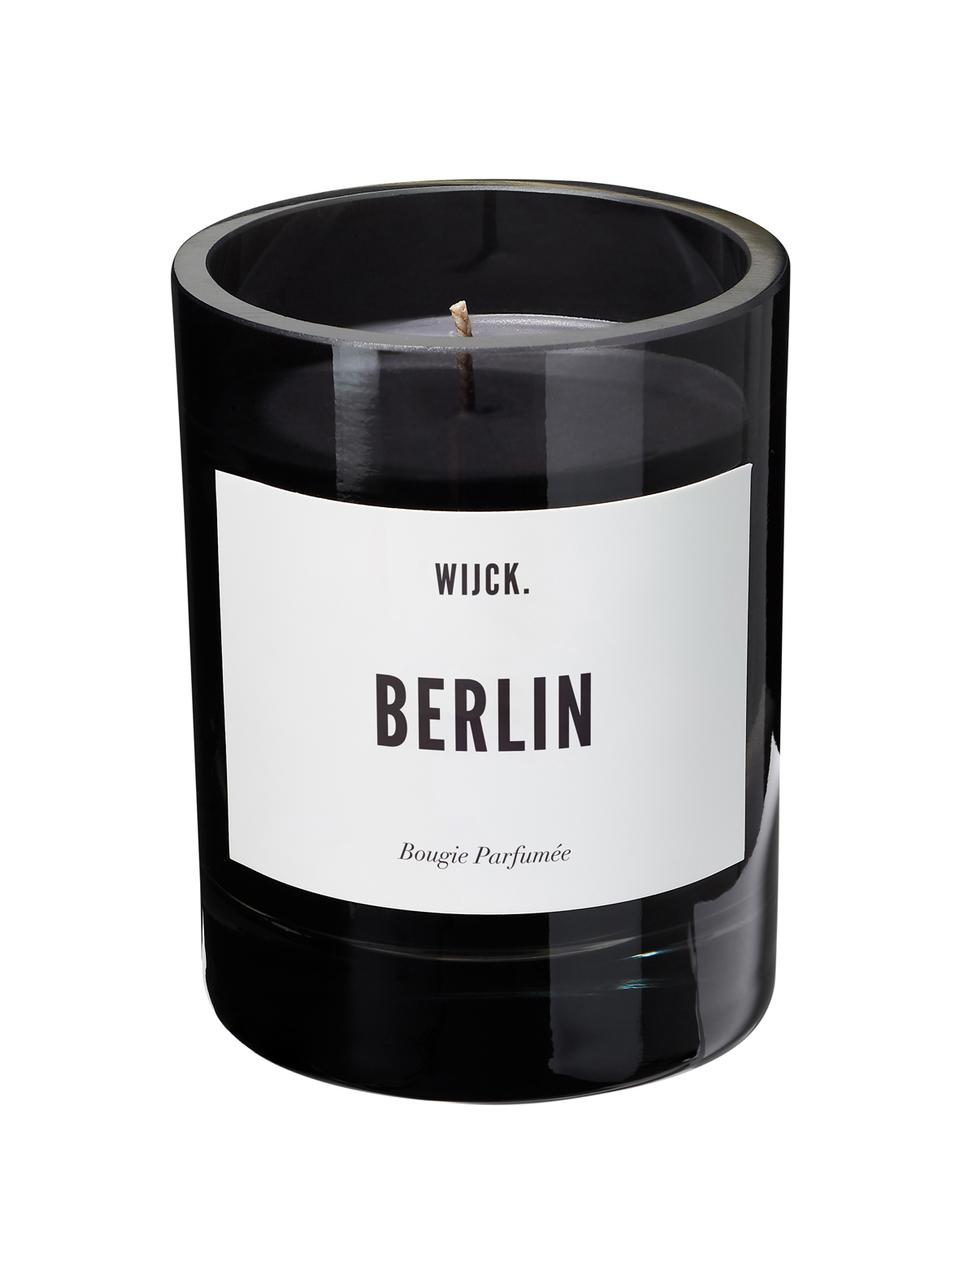 Vonná svíčka Berlin (zelený citrón, konvalinka & pižmo), Černá, Ø 8 cm